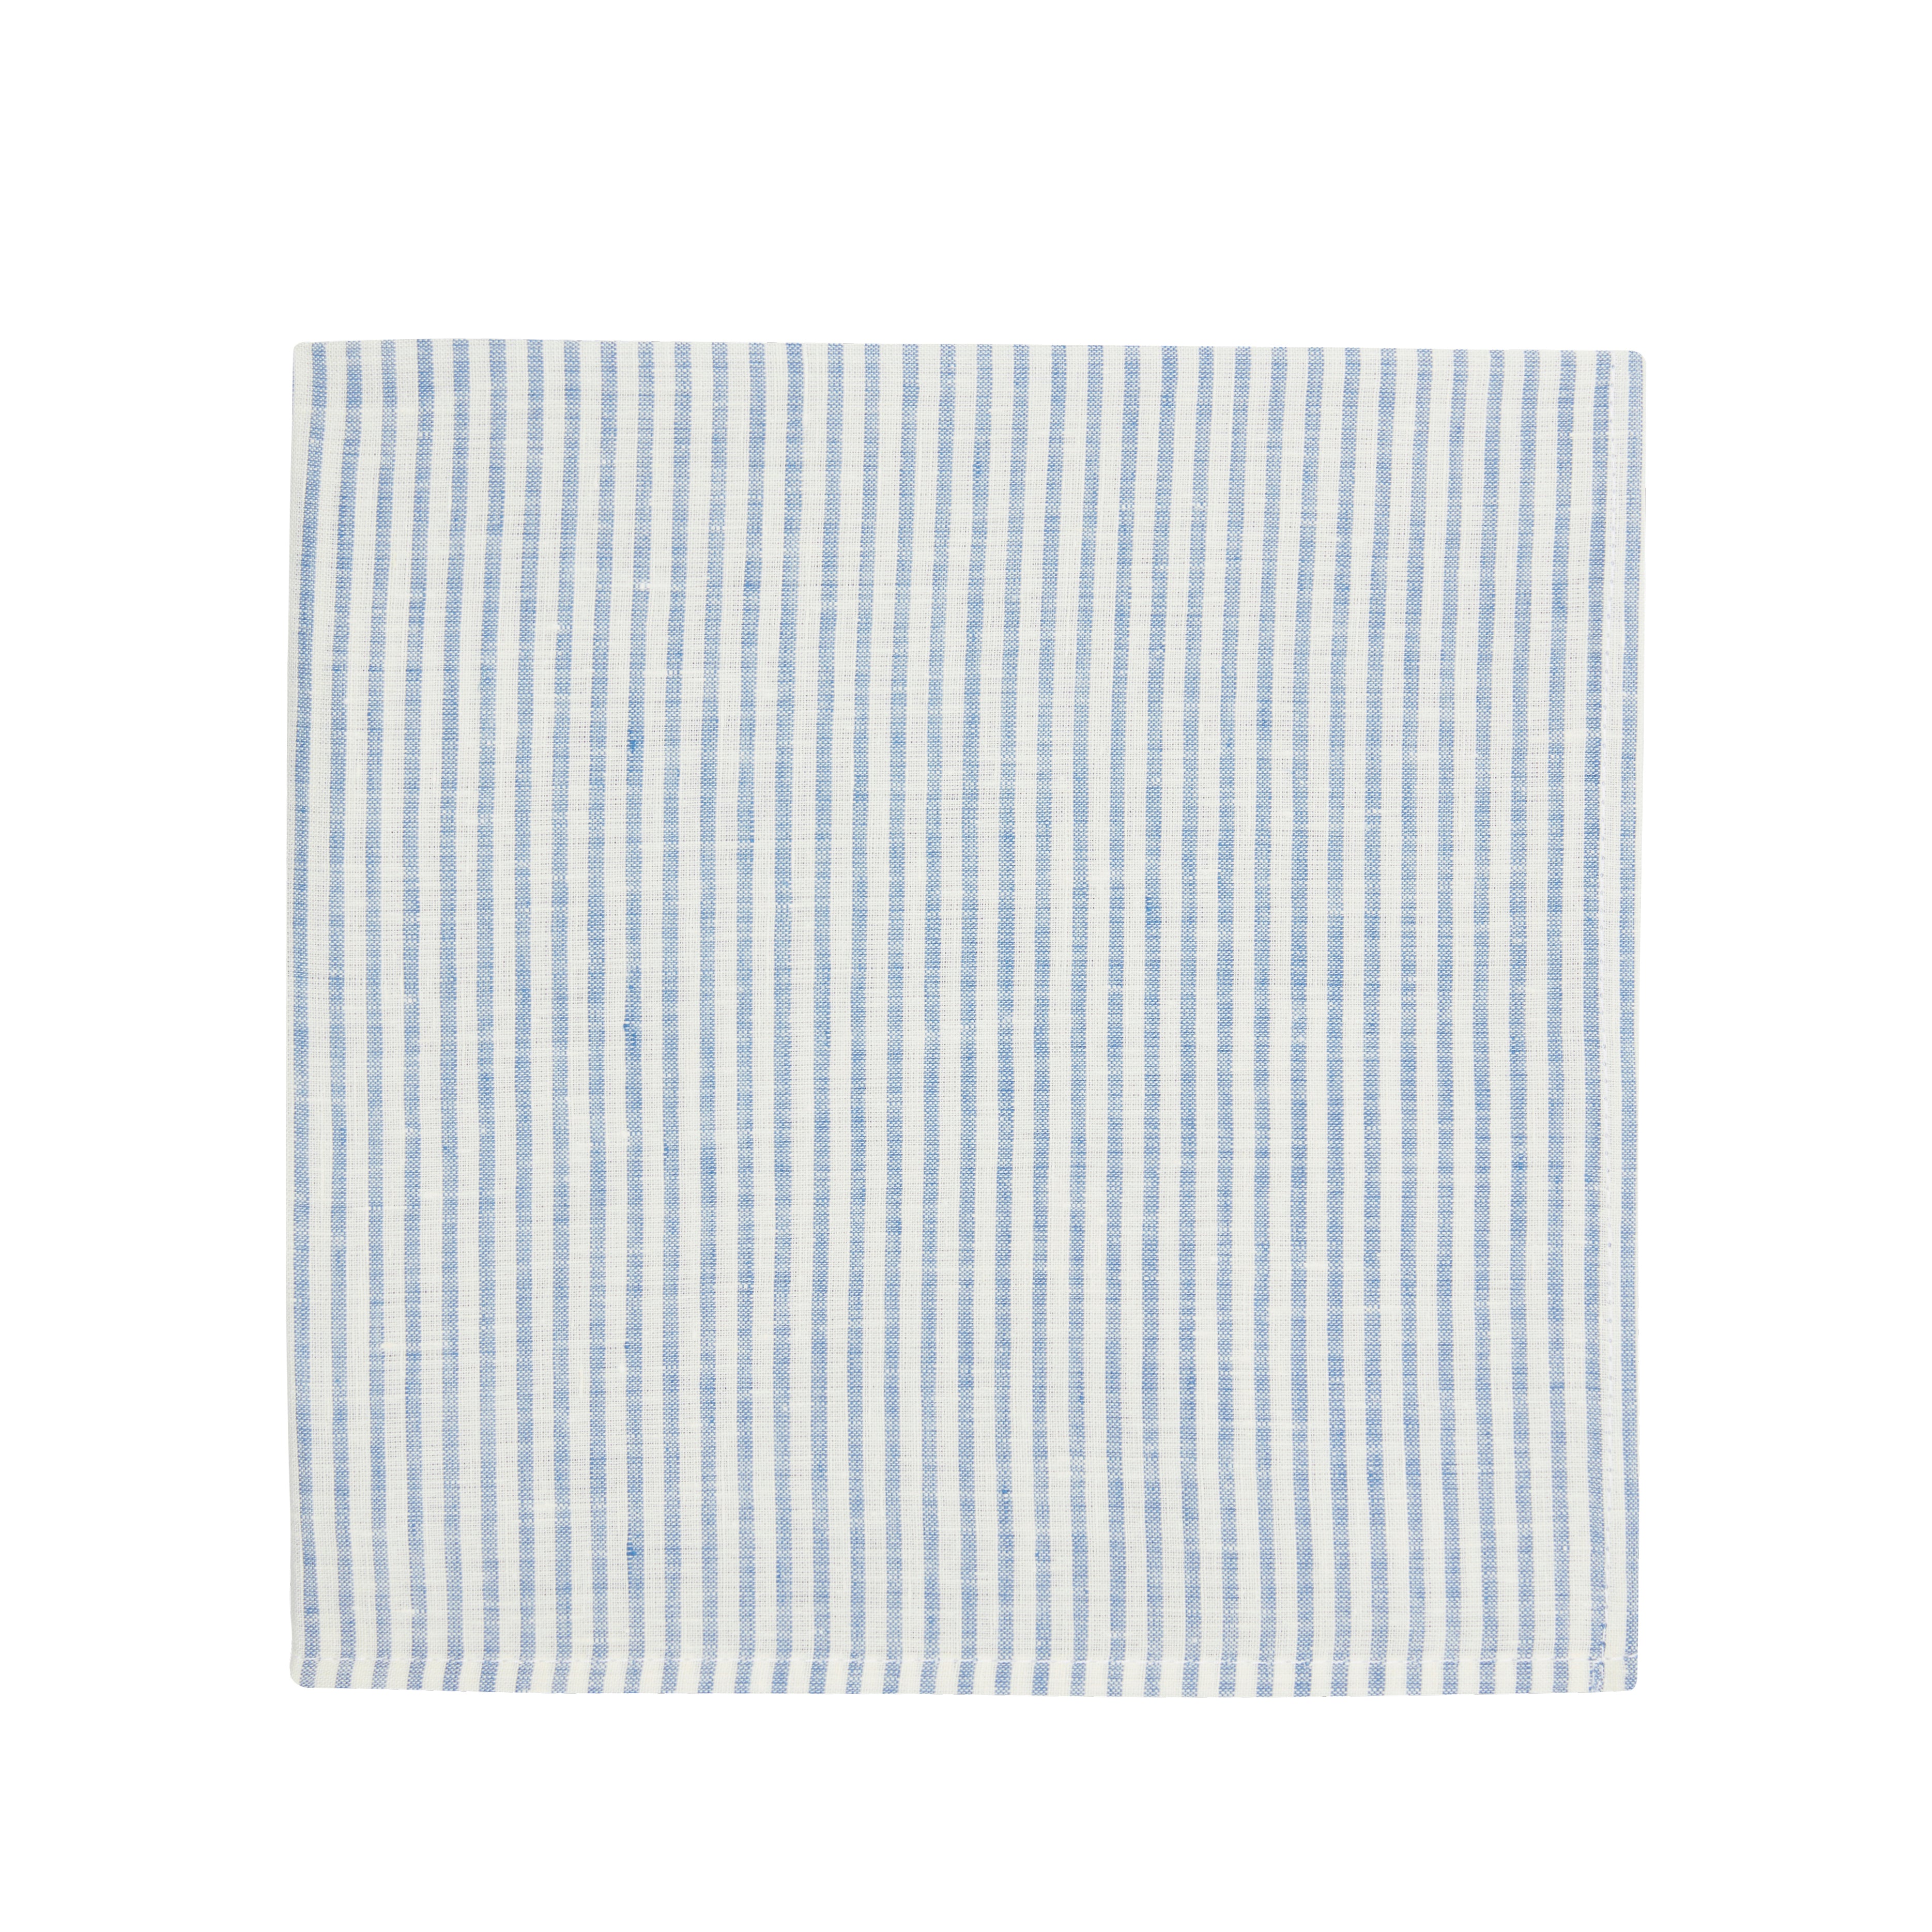 Napkin Stripe 54cm x 54cm - Blue and White